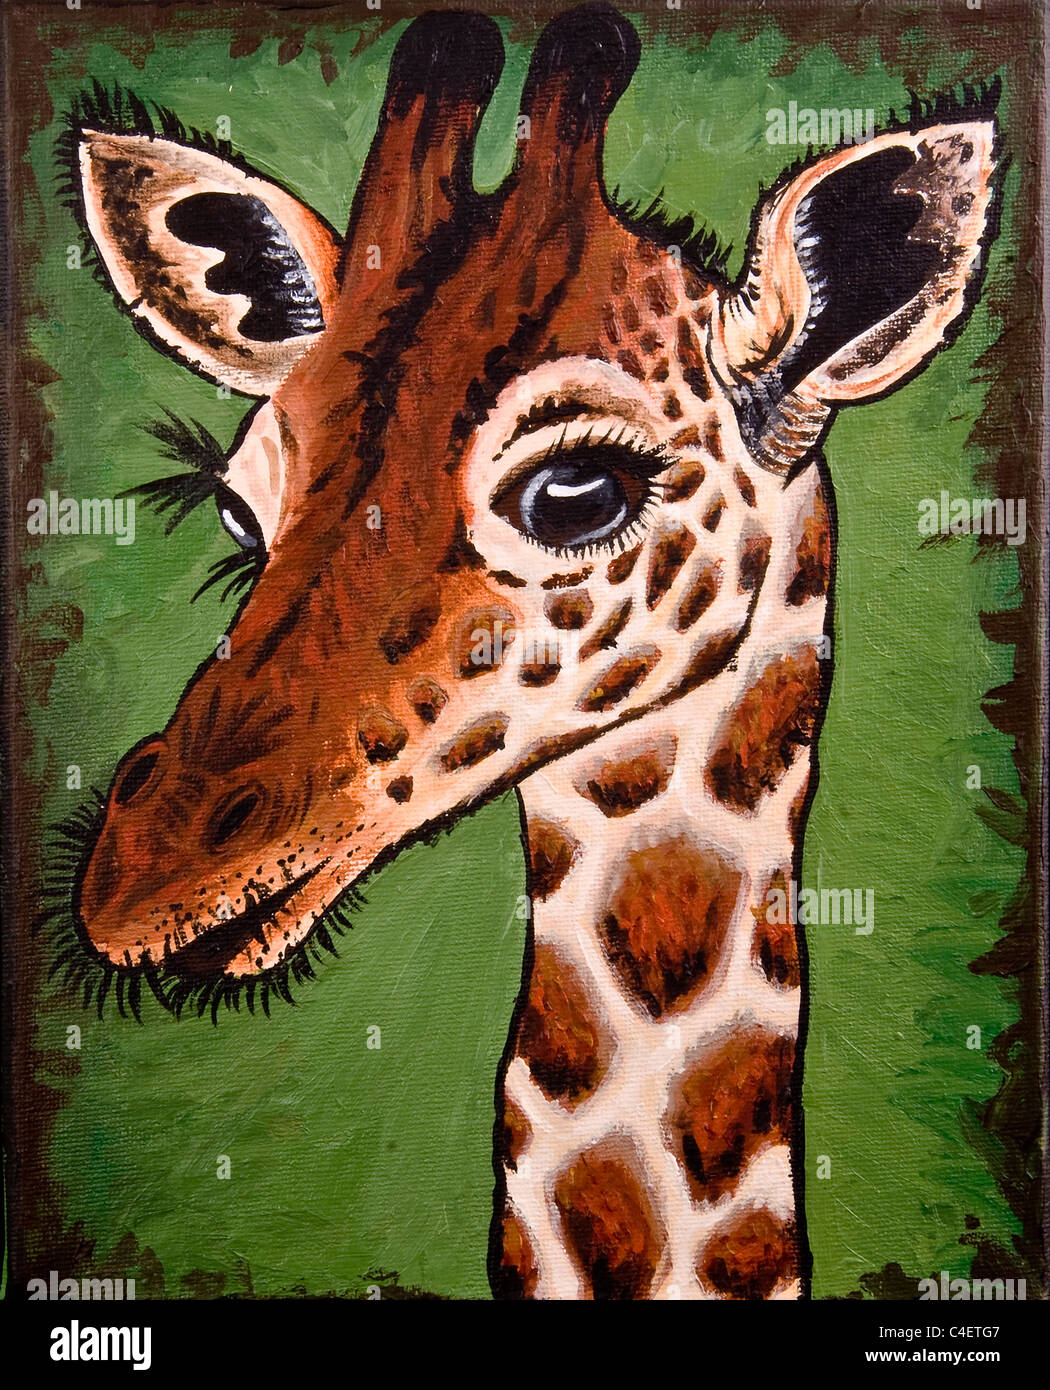 Pintura de jirafas fotografías e imágenes de alta resolución - Alamy